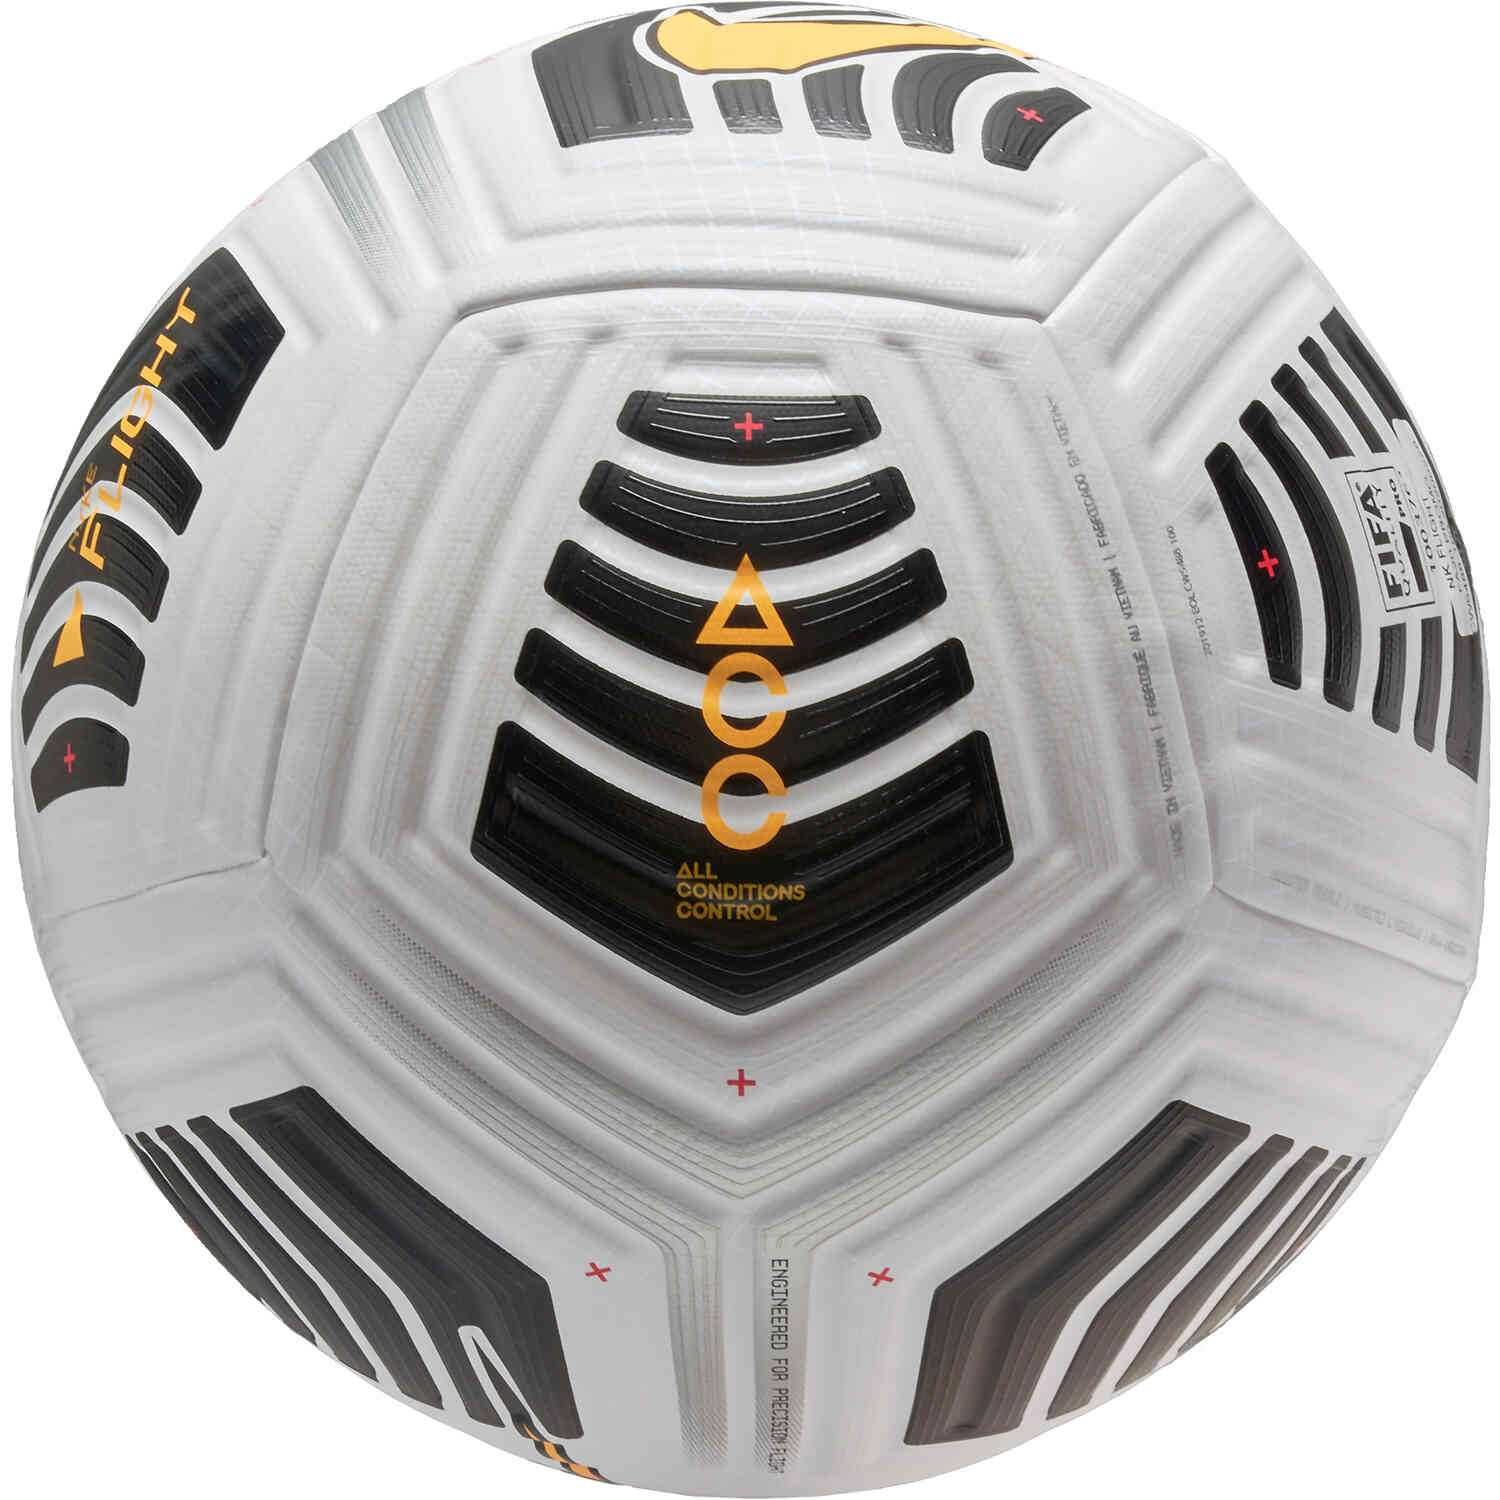 Nike Flight Premium Match Soccer Ball  White & Black with Laser Orange